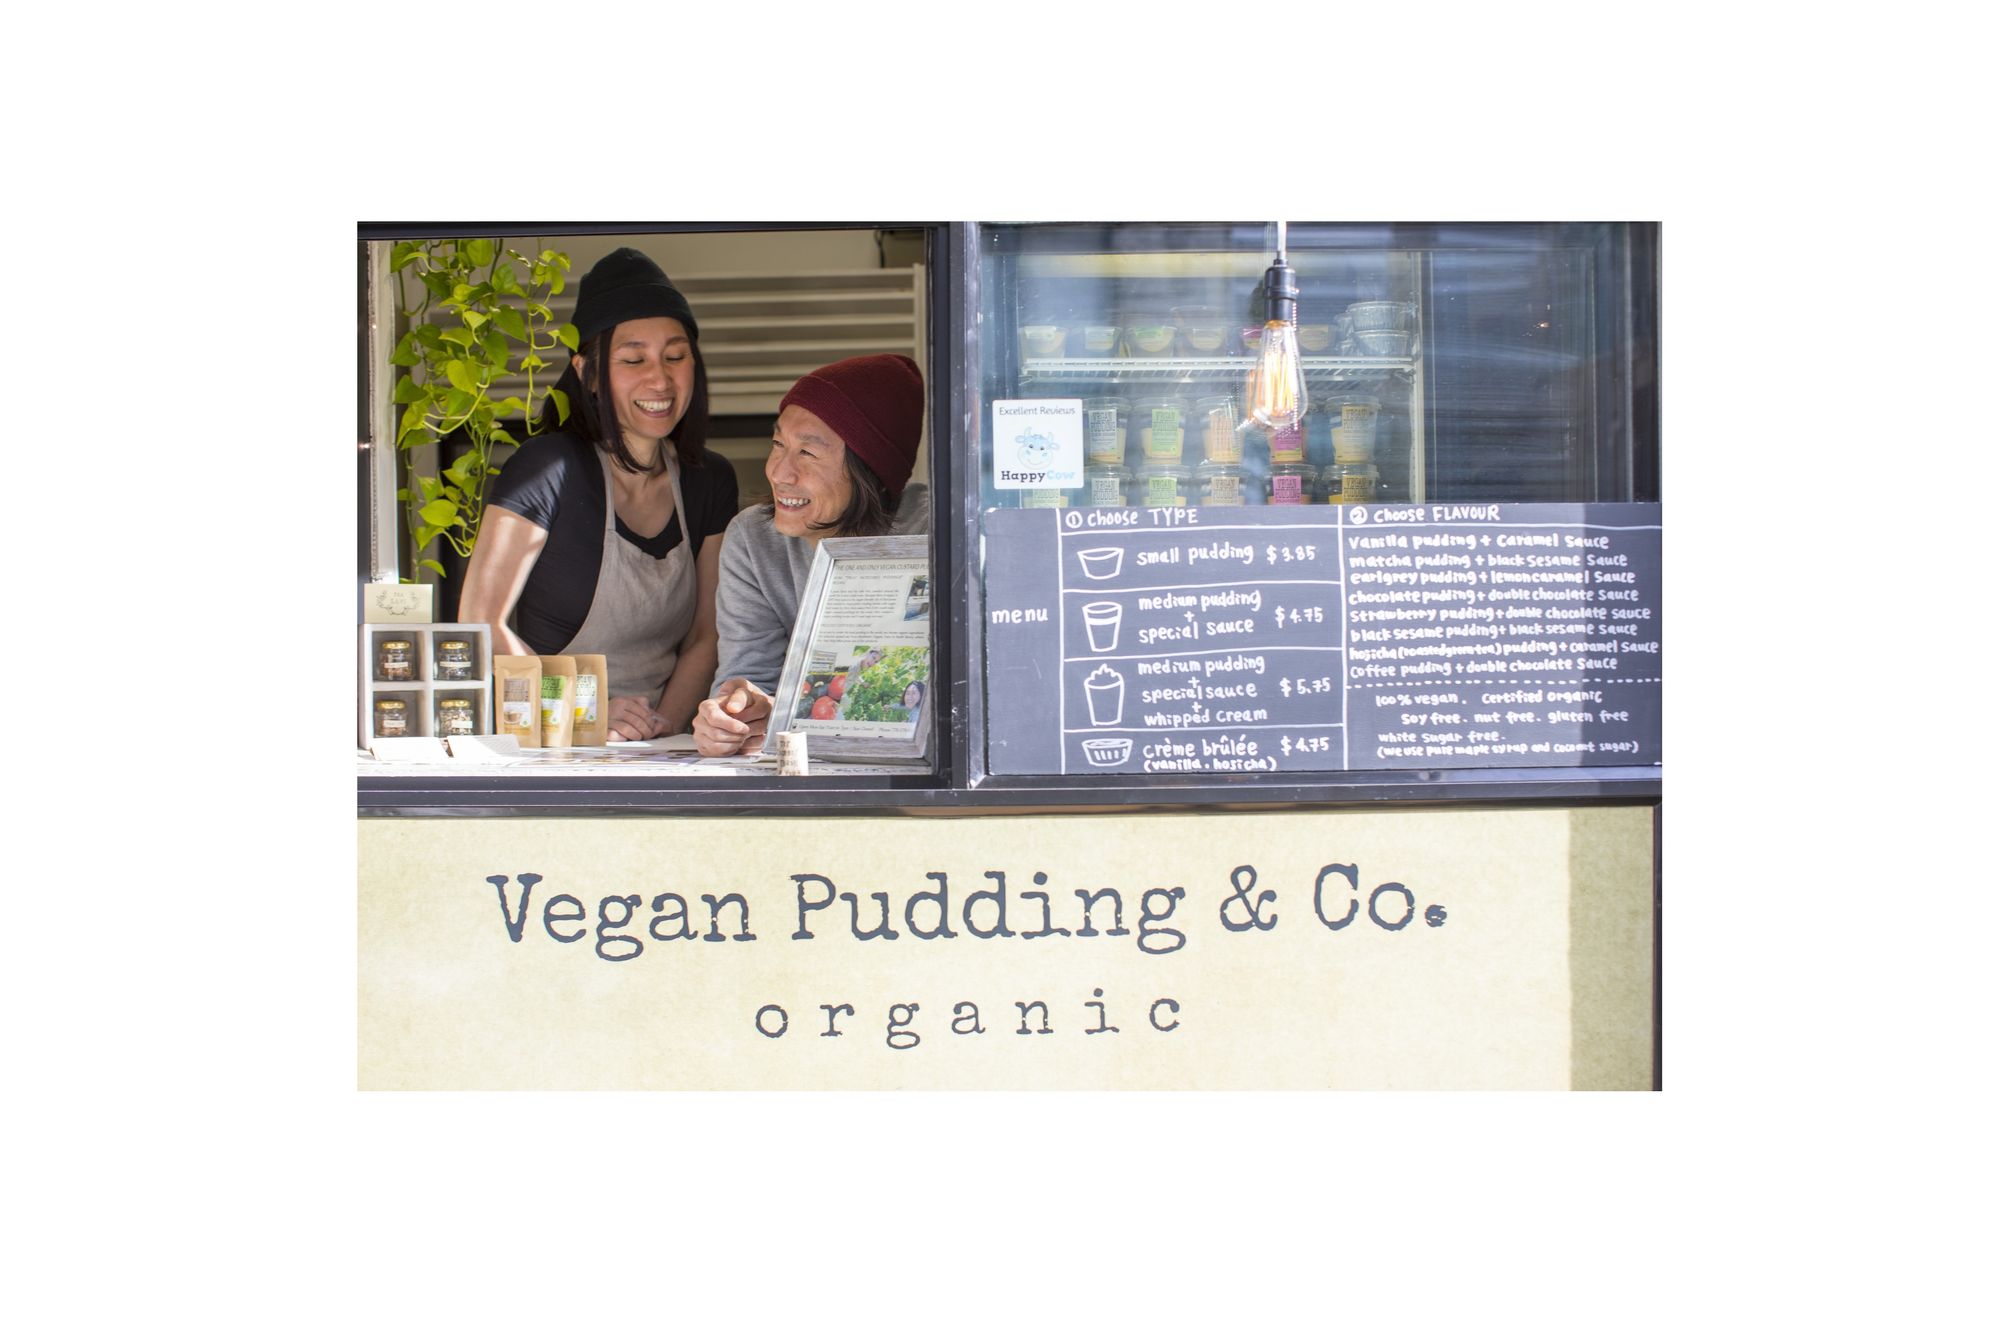 The Only Vegan Custard Pudding Store - Vegan Pudding & Co.